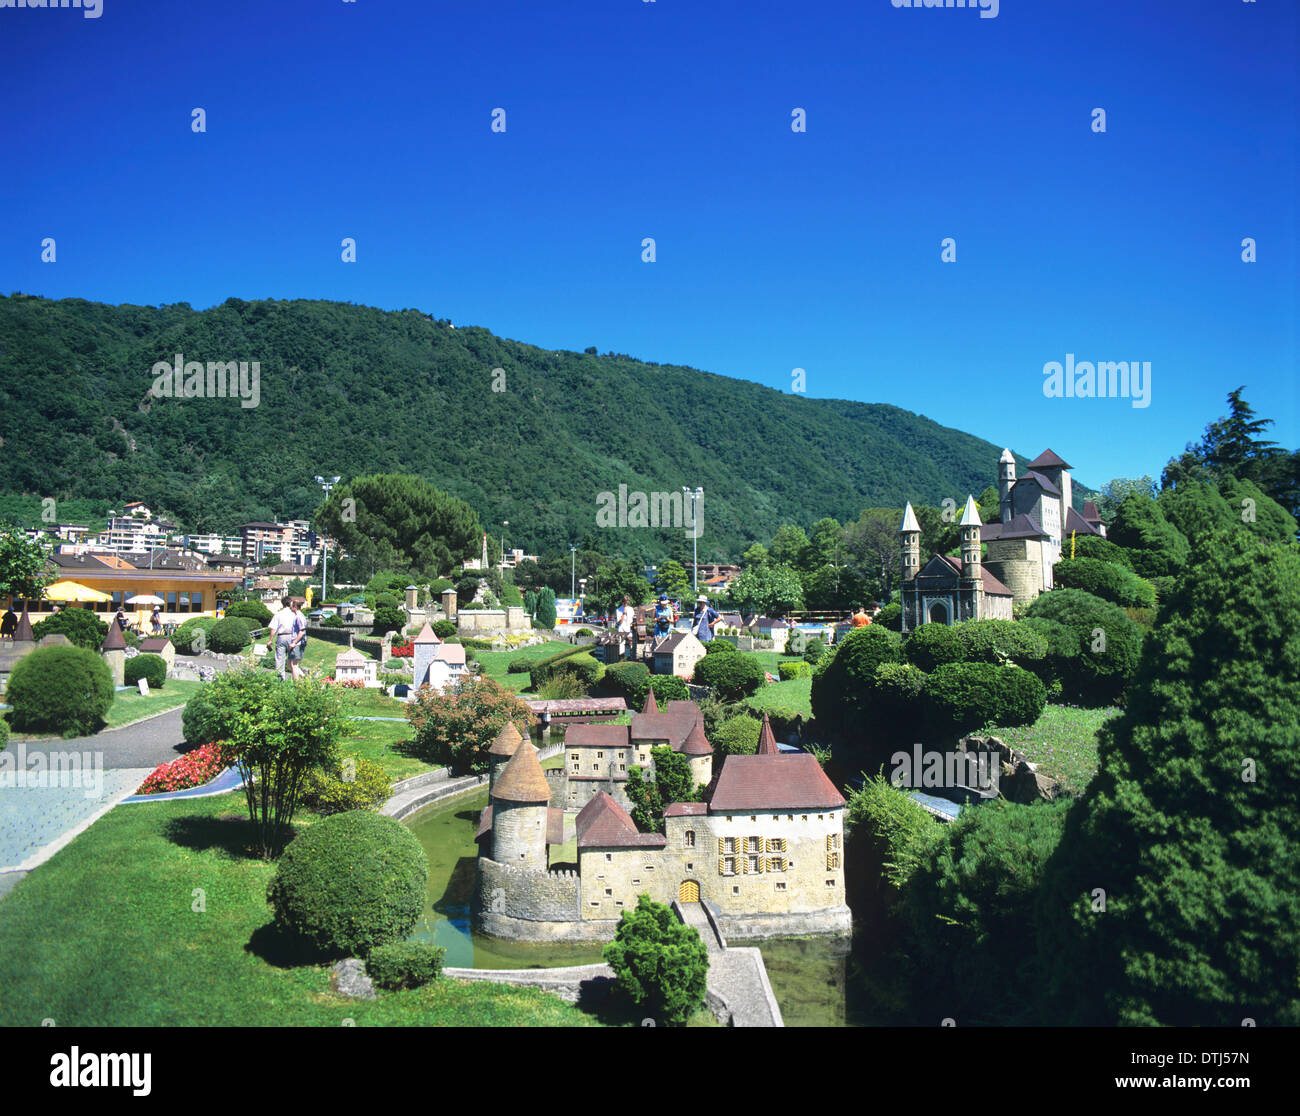 Miniature models of Swiss town at Swissminiatur Stock Photo